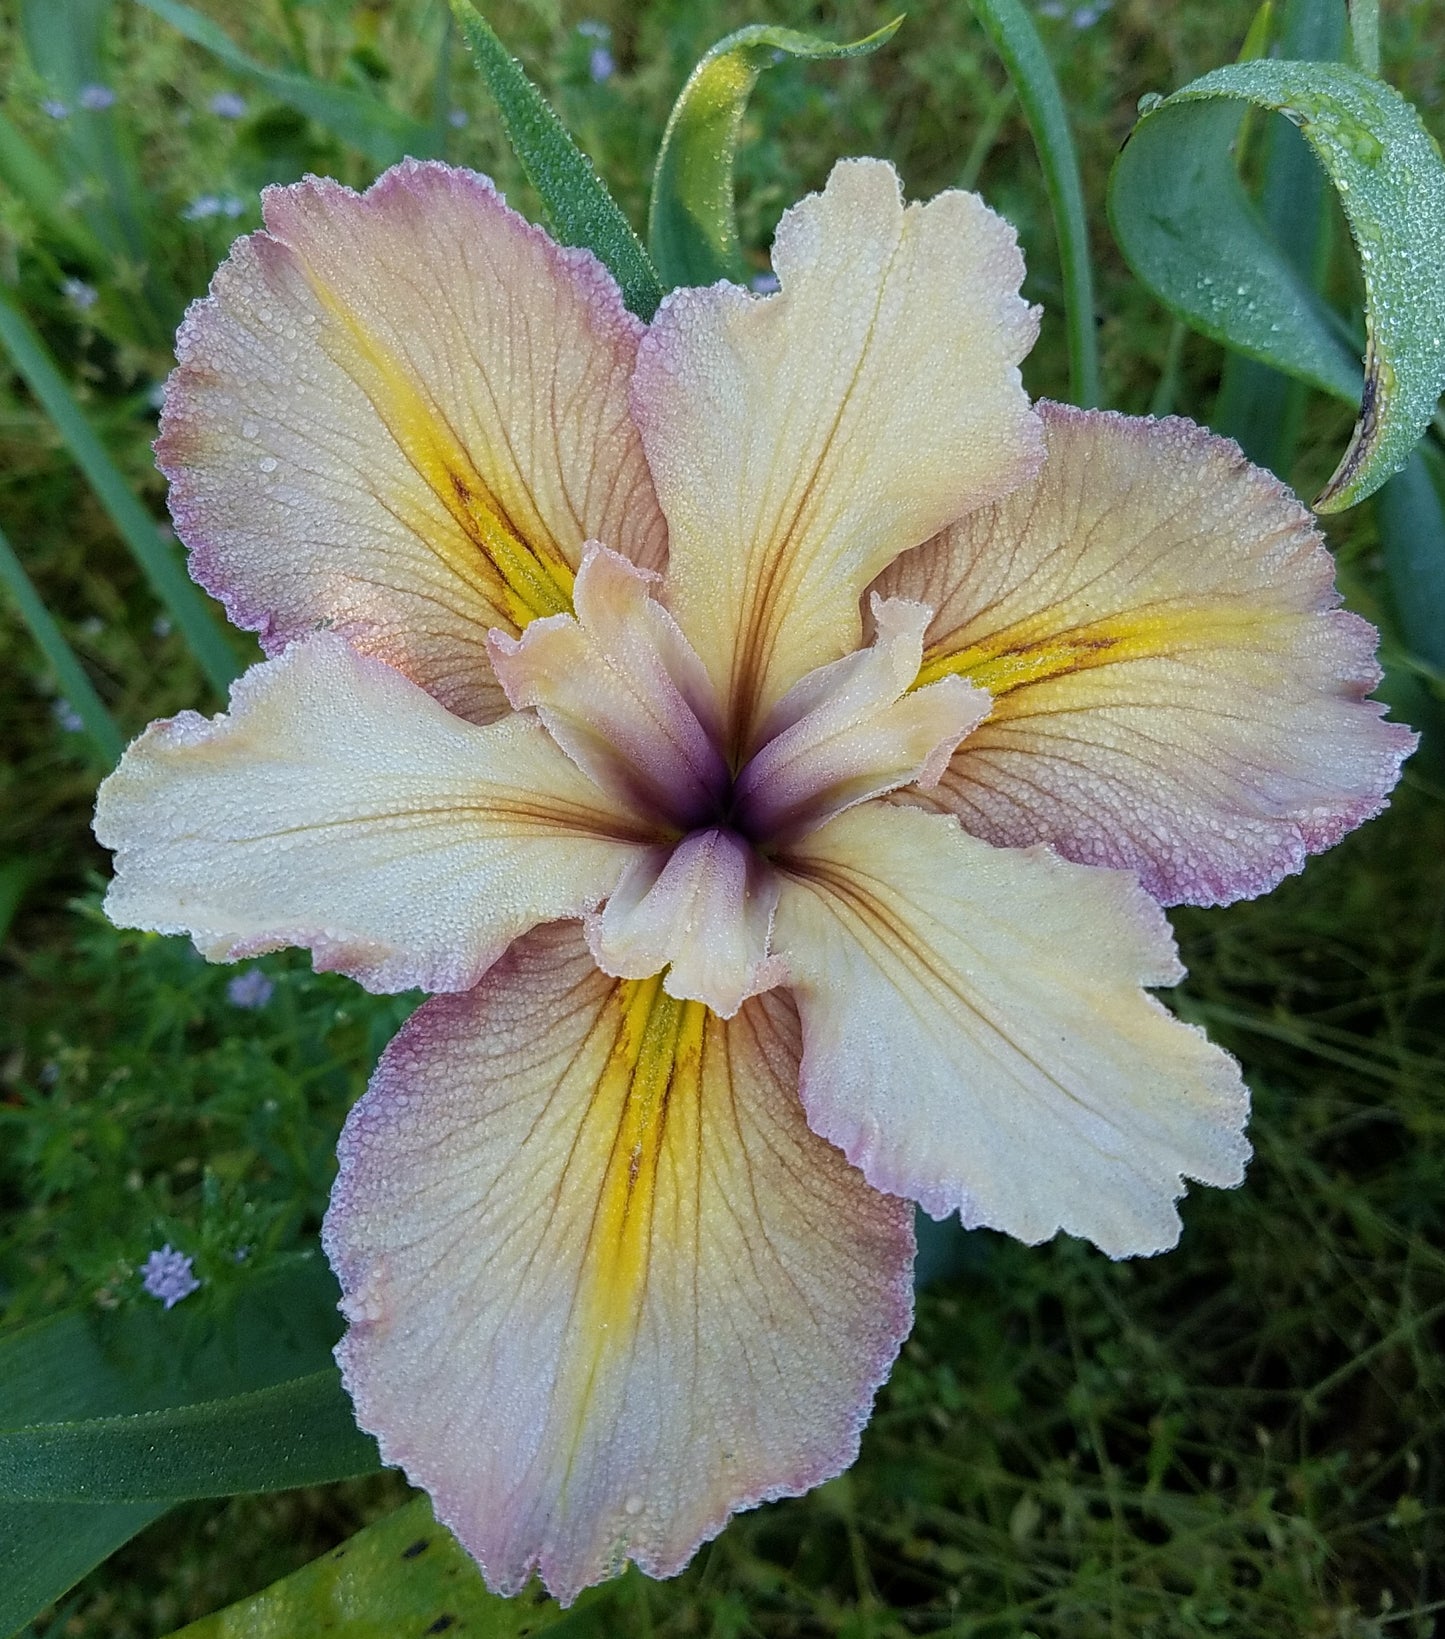 Image of an aged bloom of Louisiana Iris Wild Breeze. Image credit: Brian Shamblin